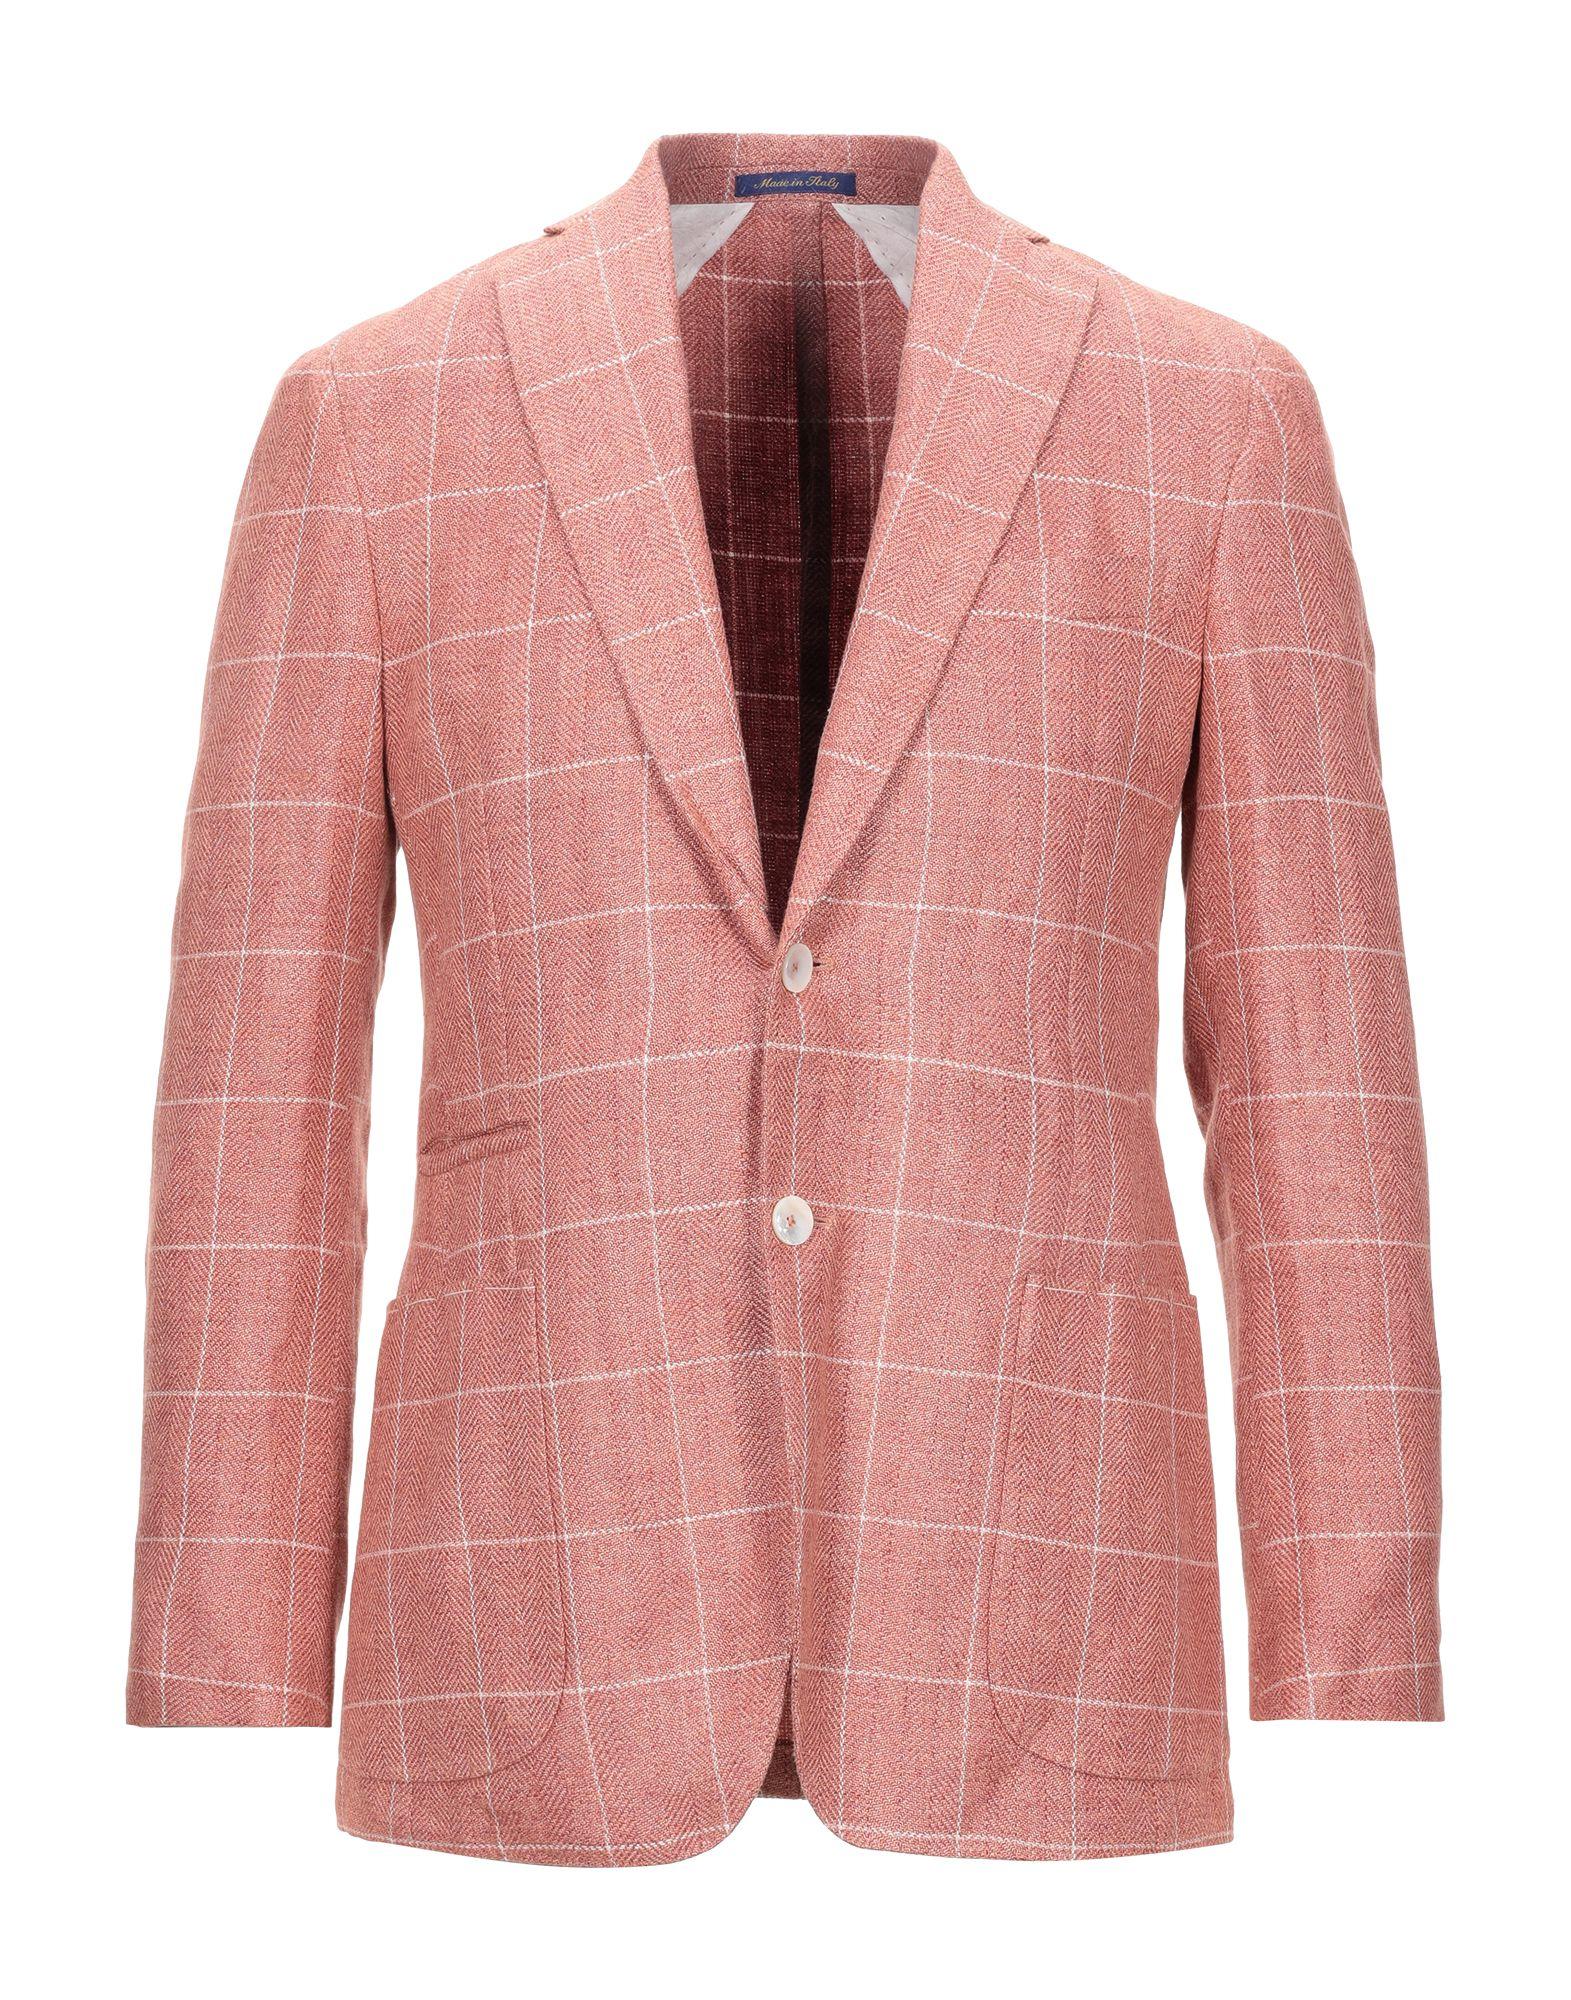 Pal Zileri Suit Jacket in Pale Pink (Pink) for Men - Lyst